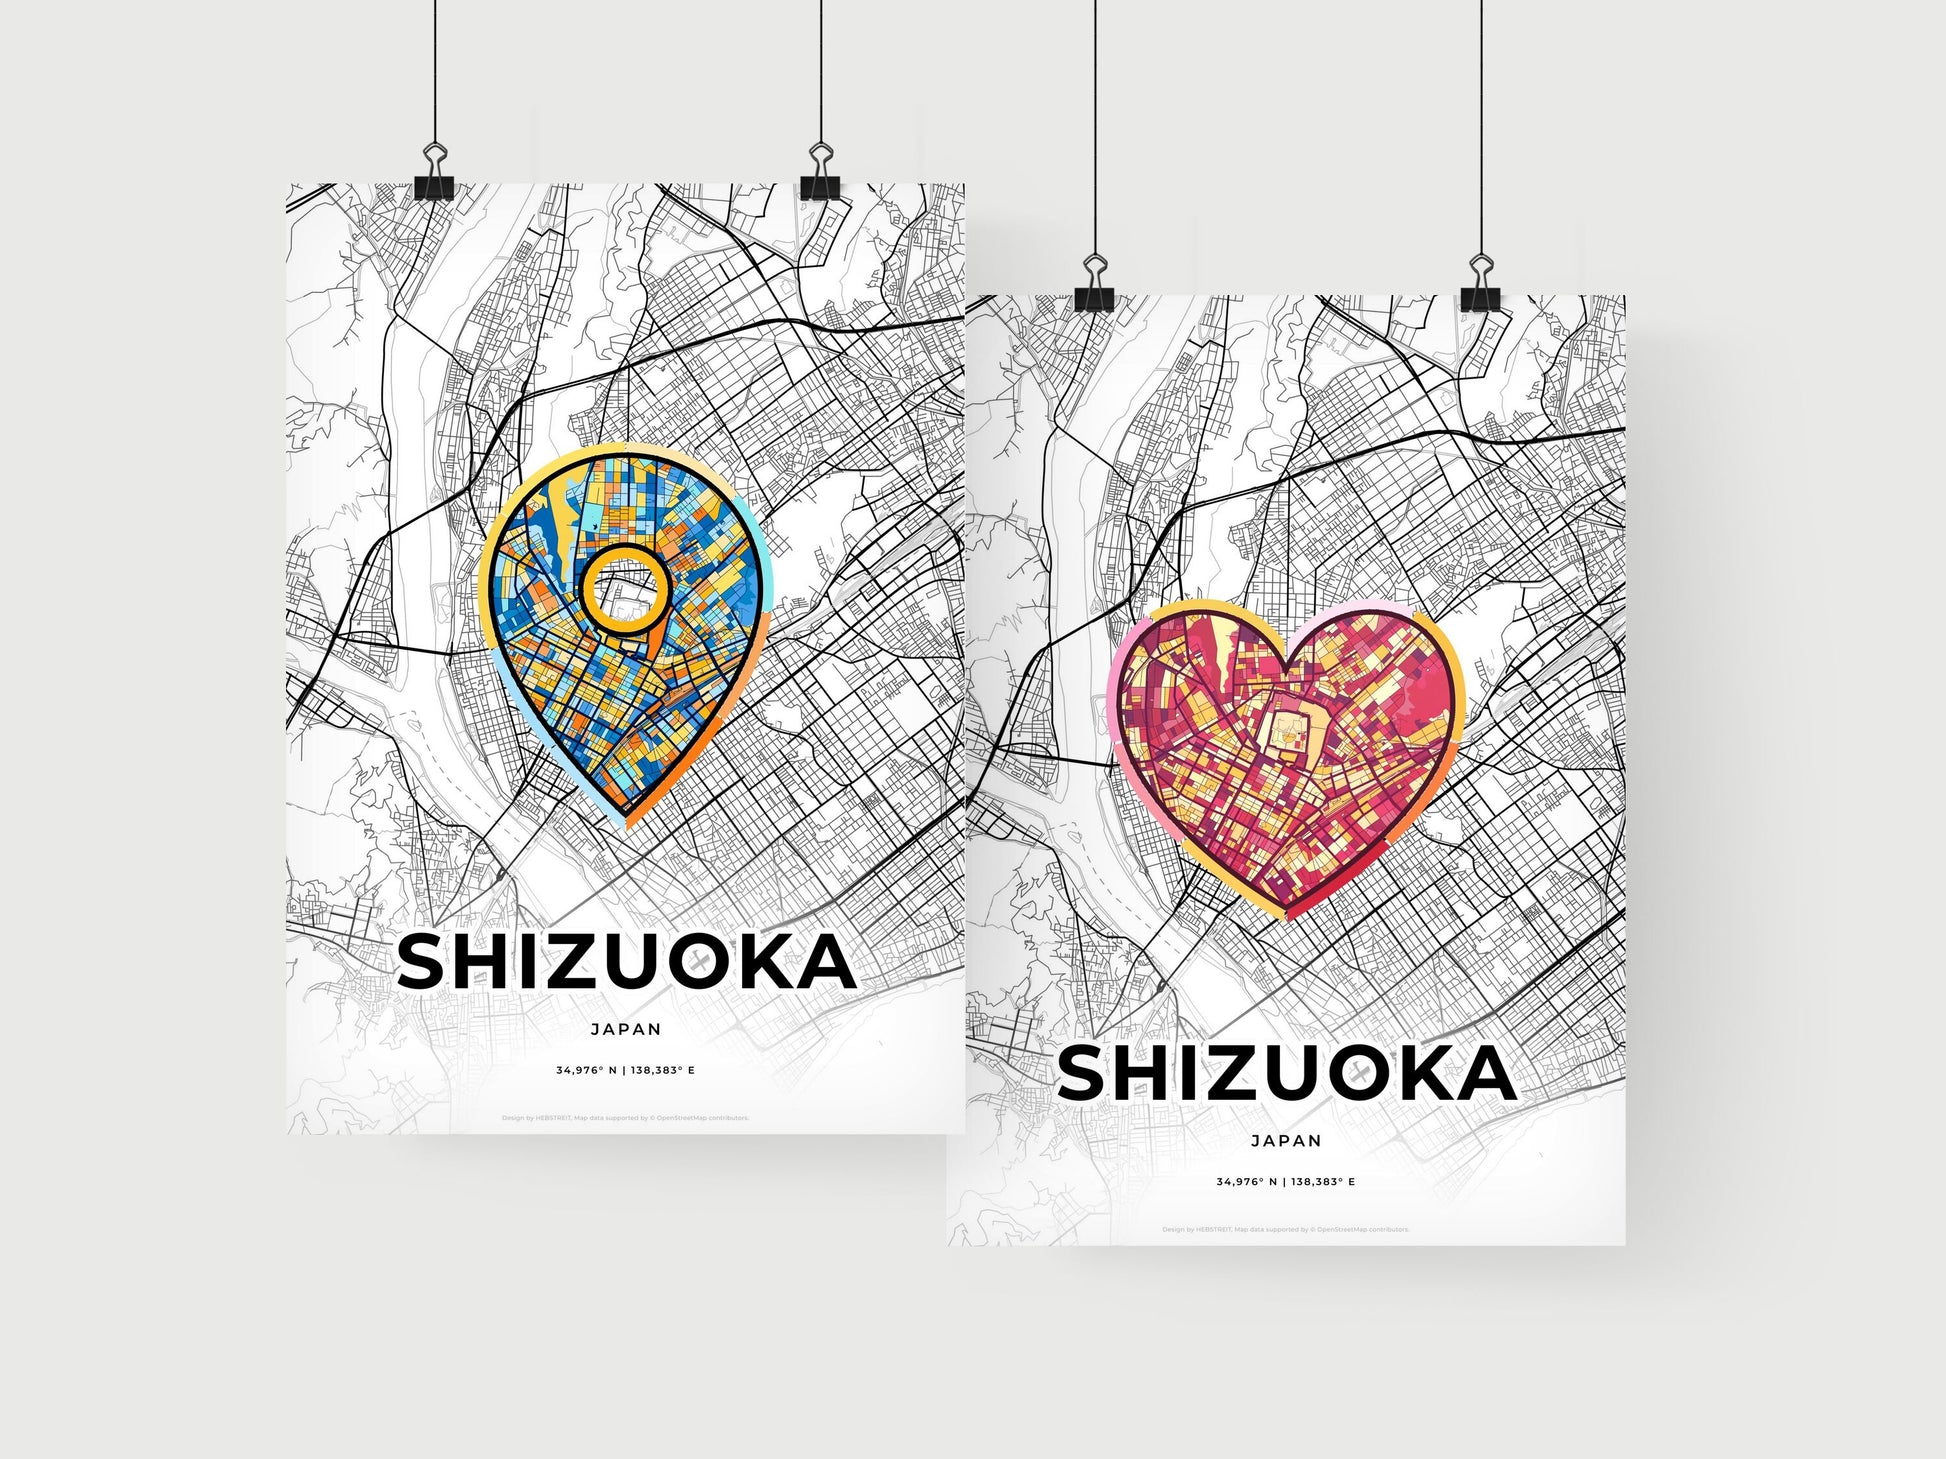 SHIZUOKA JAPAN minimal art map with a colorful icon.